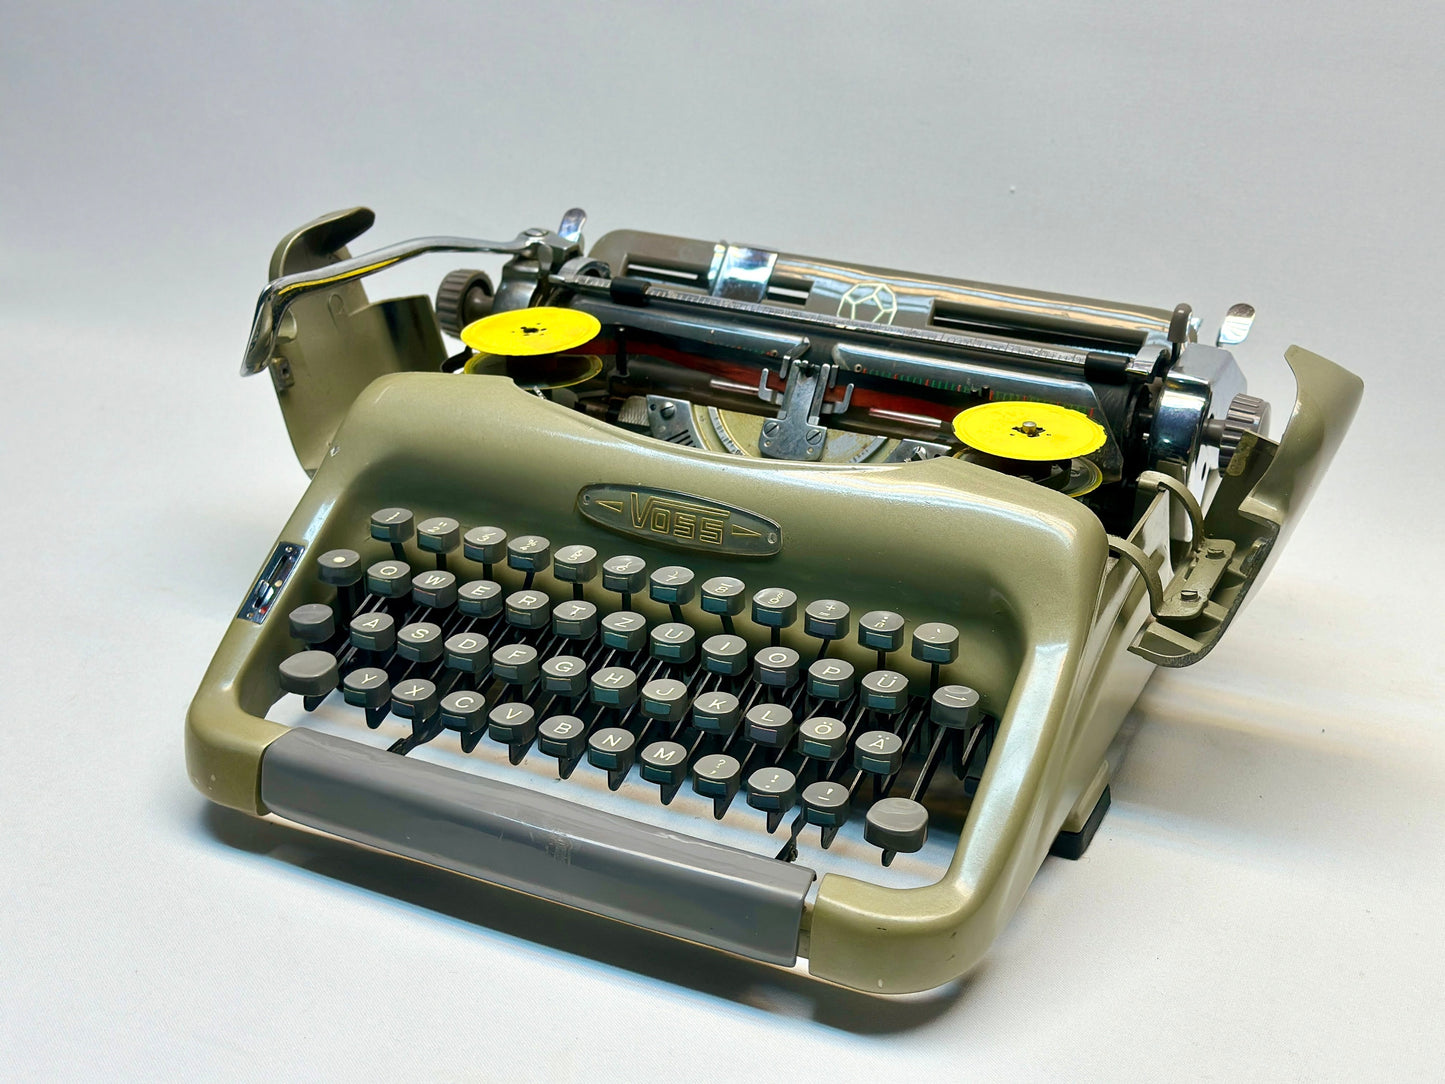 Voss Typewriter - Classic 1950 Model in Elegant Green with QWERTZ Keyboard